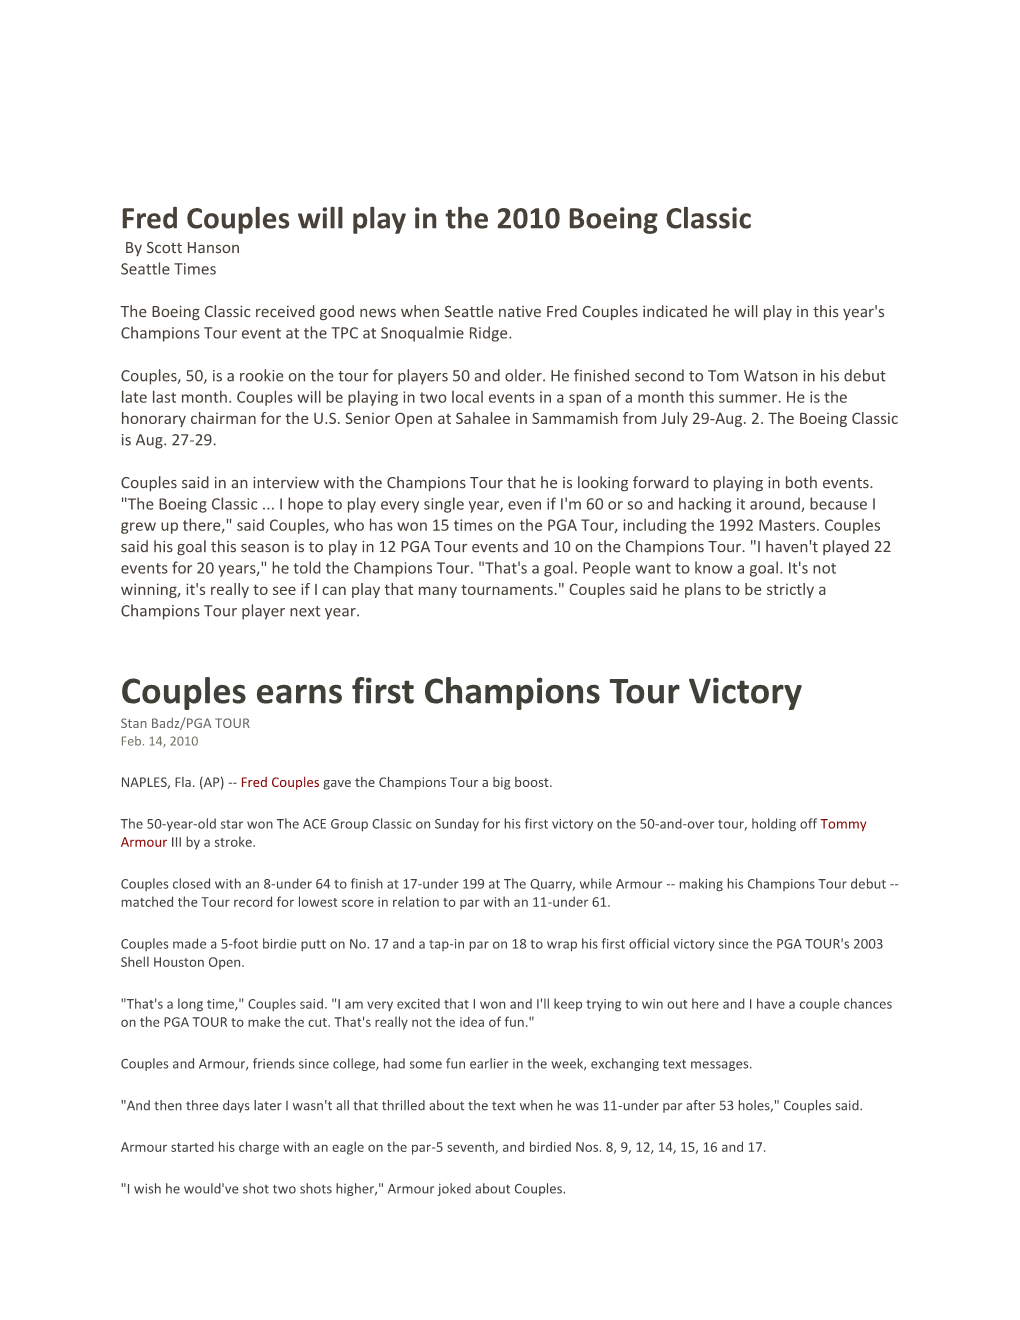 Couples Earns First Champions Tour Victory Stan Badz/PGA TOUR Feb